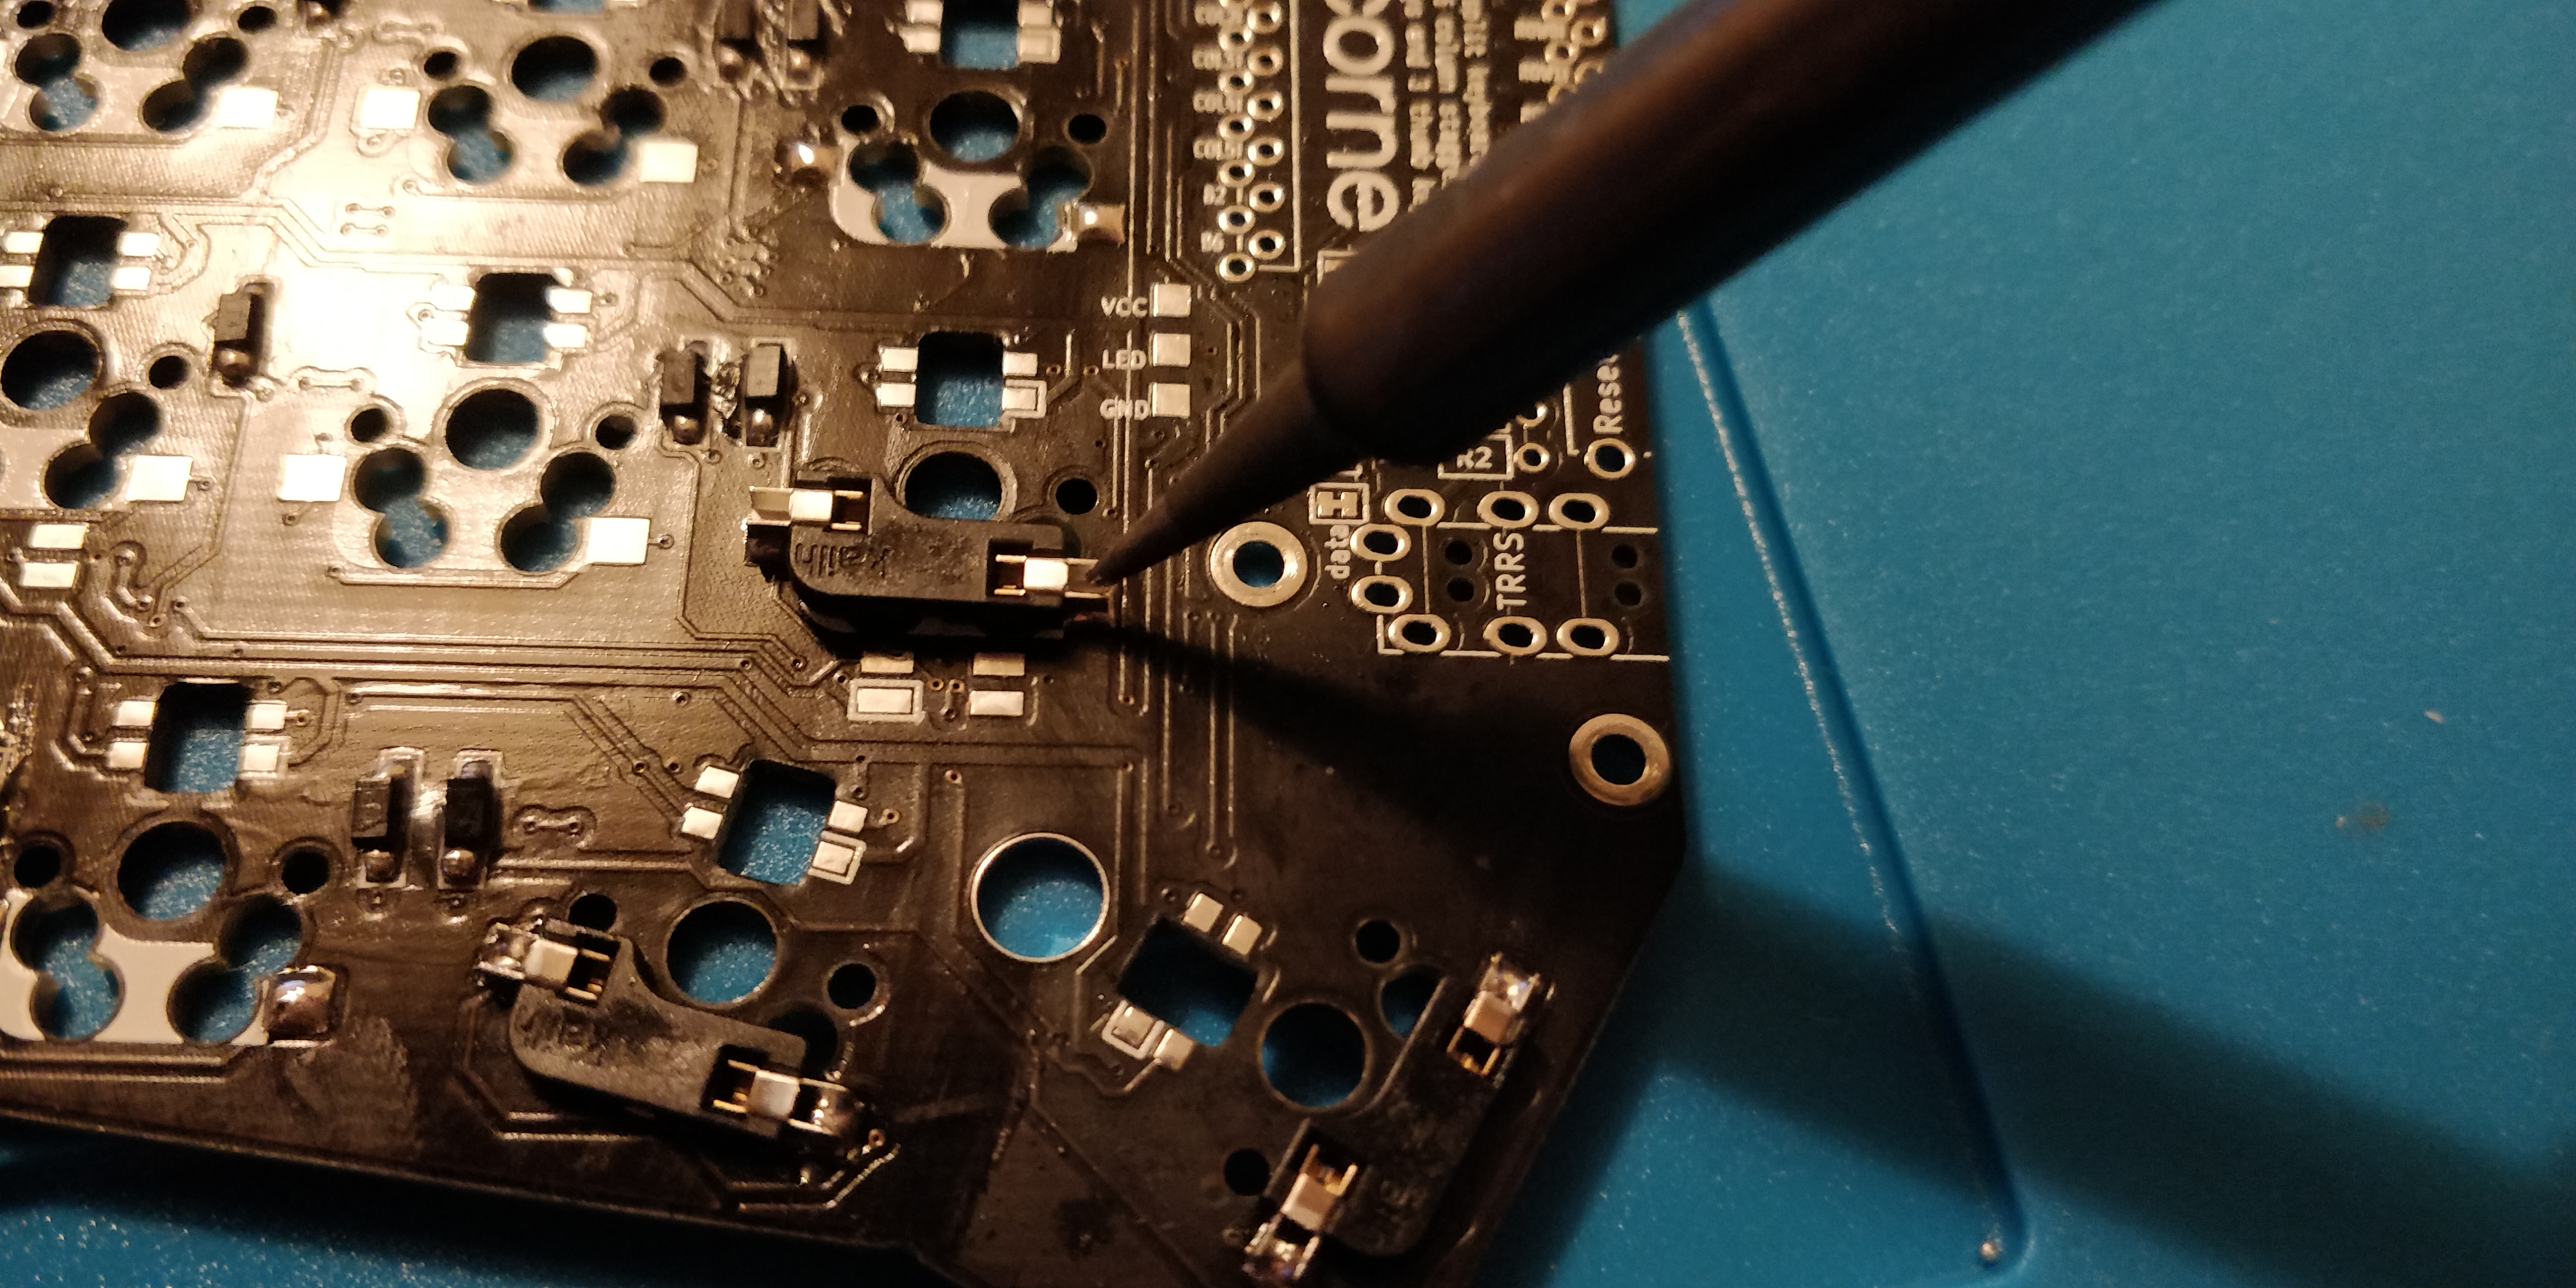 step 5 - corne crkbd - solder and push hotswap sockets